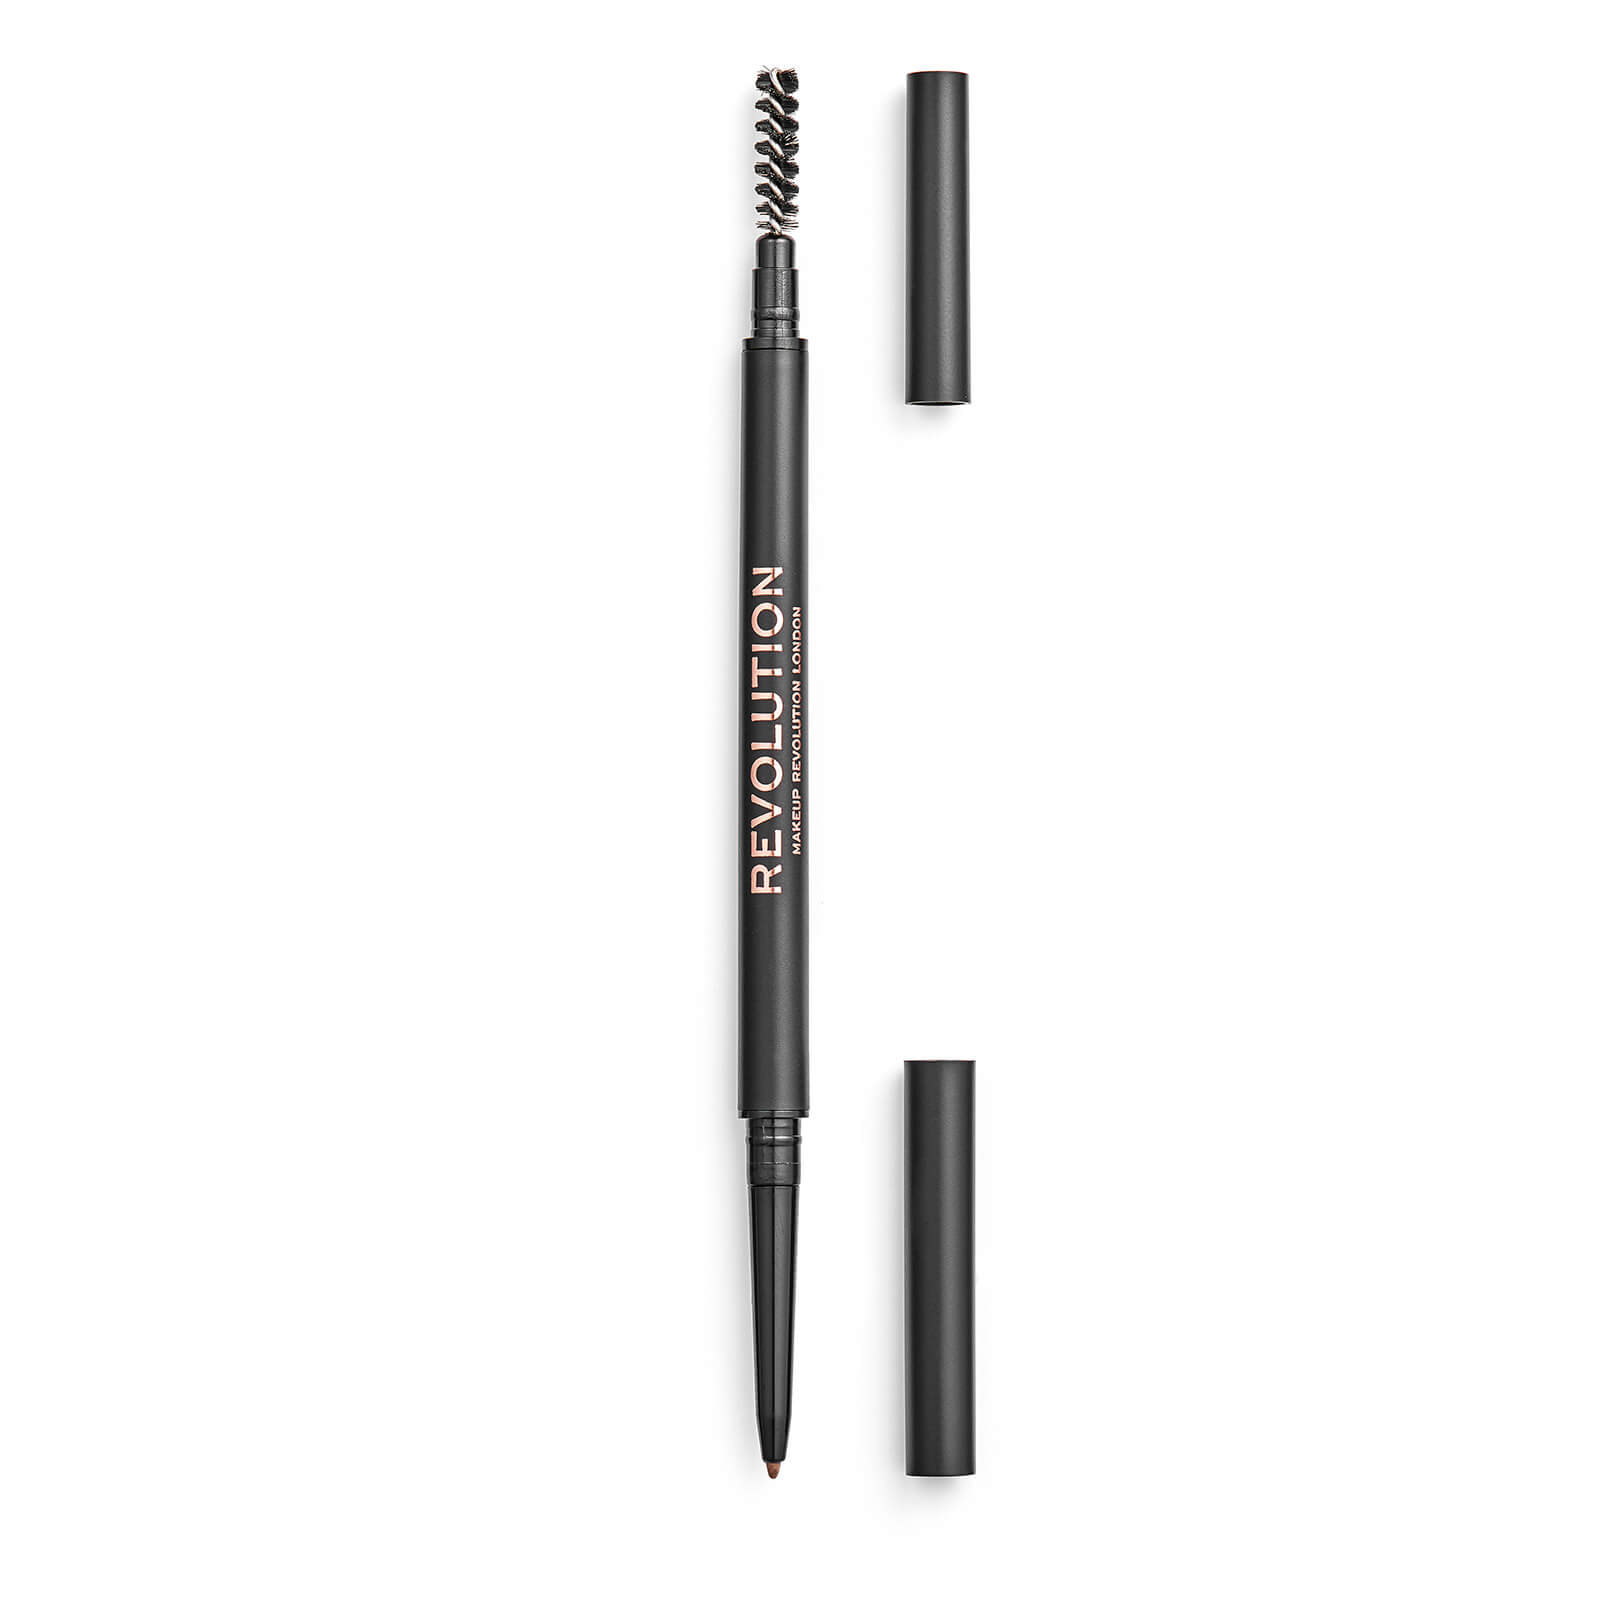 Makeup Revolution Precise Brow Pencil 0.05g (Various Shades) - Light Brown